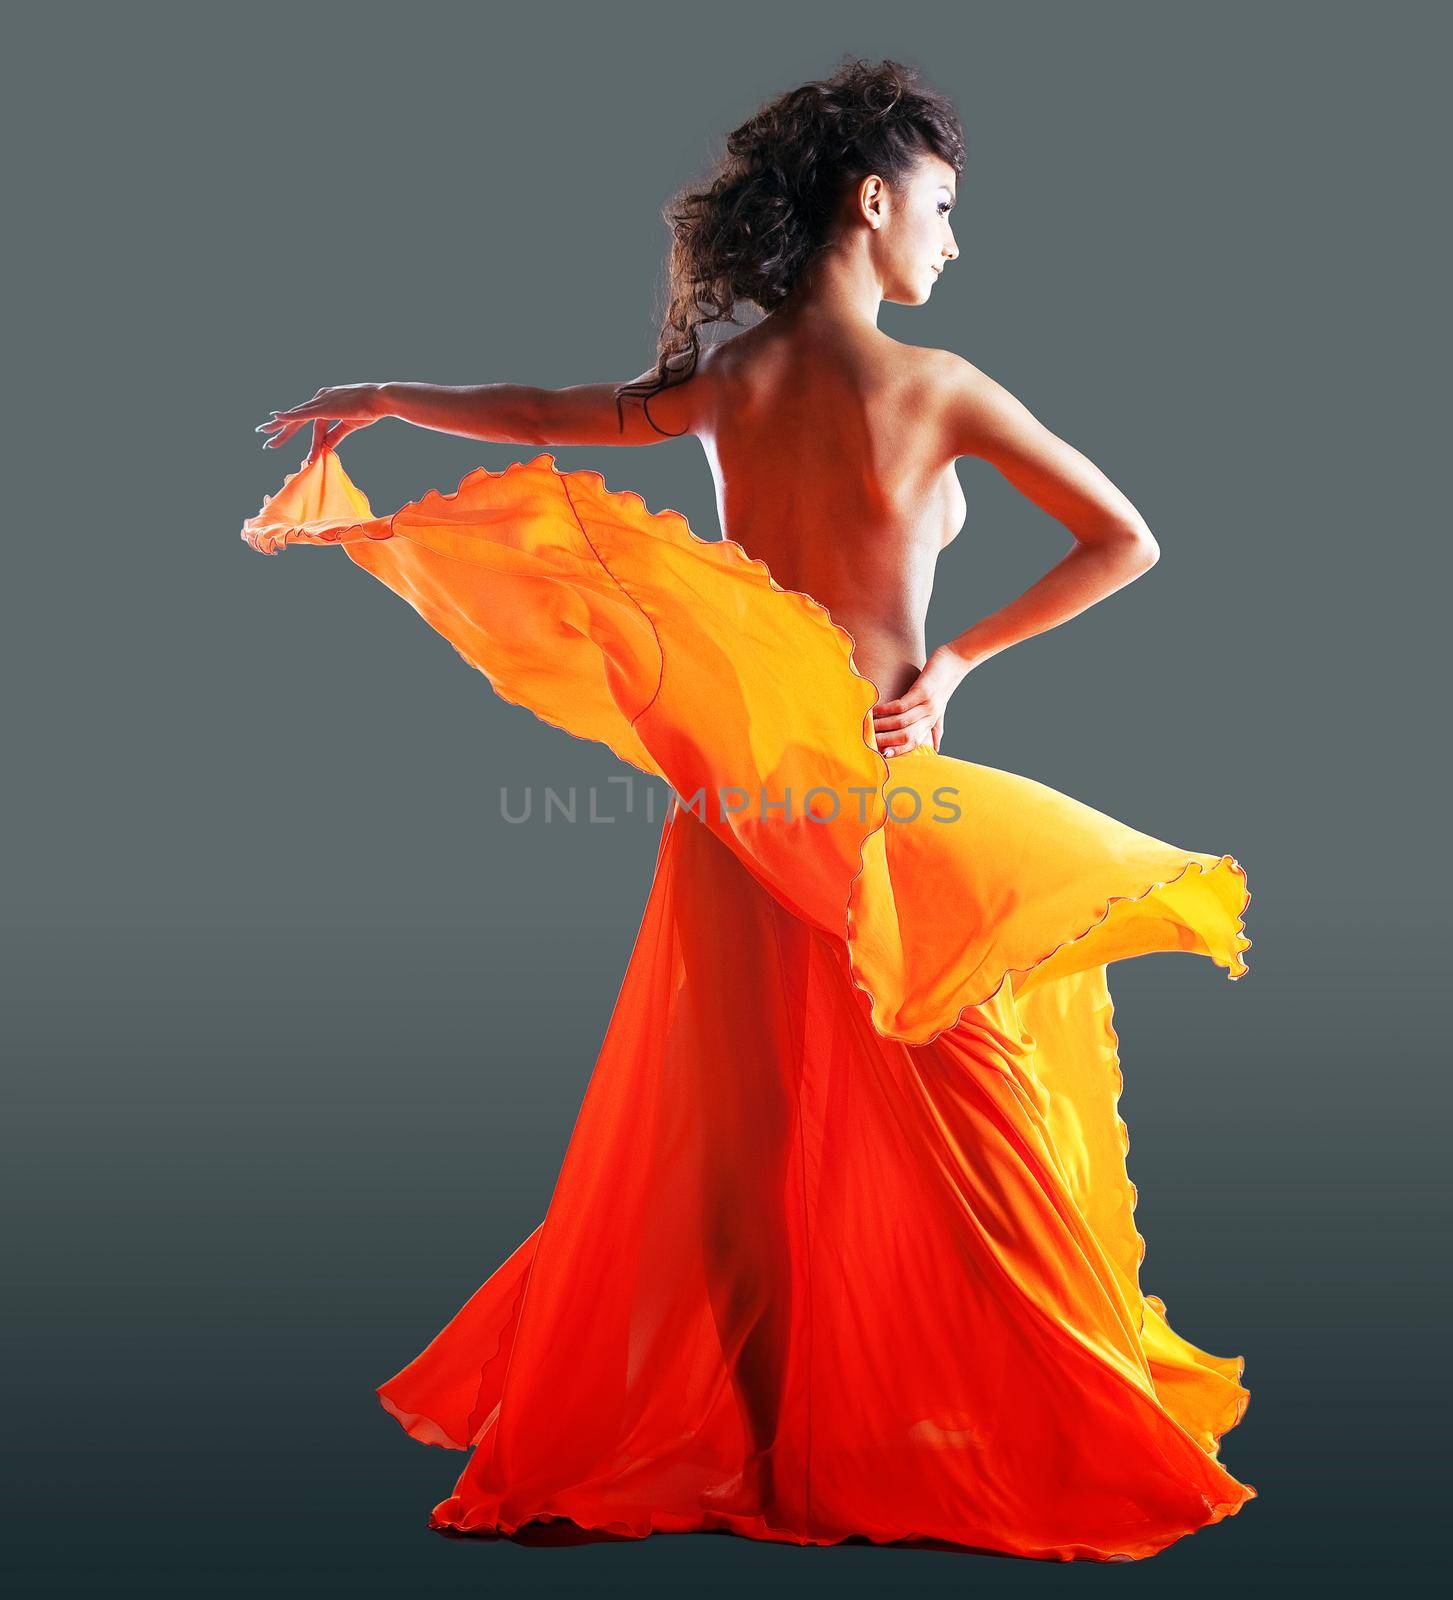 beauty naked woman dance in orange veil by rivertime